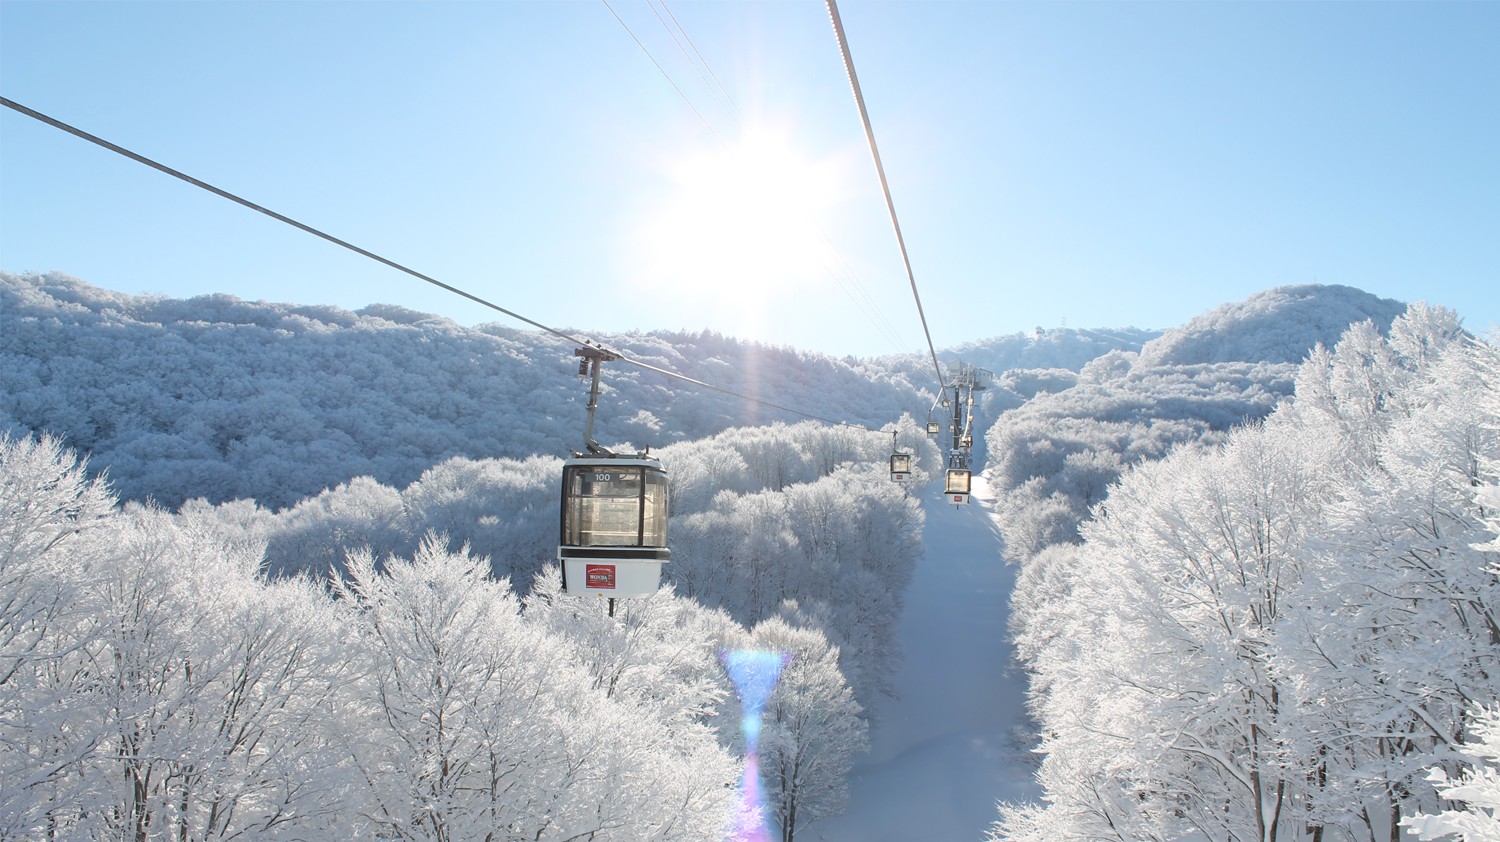 Nozawa Onsen - one of Asia's top 5 ski resorts